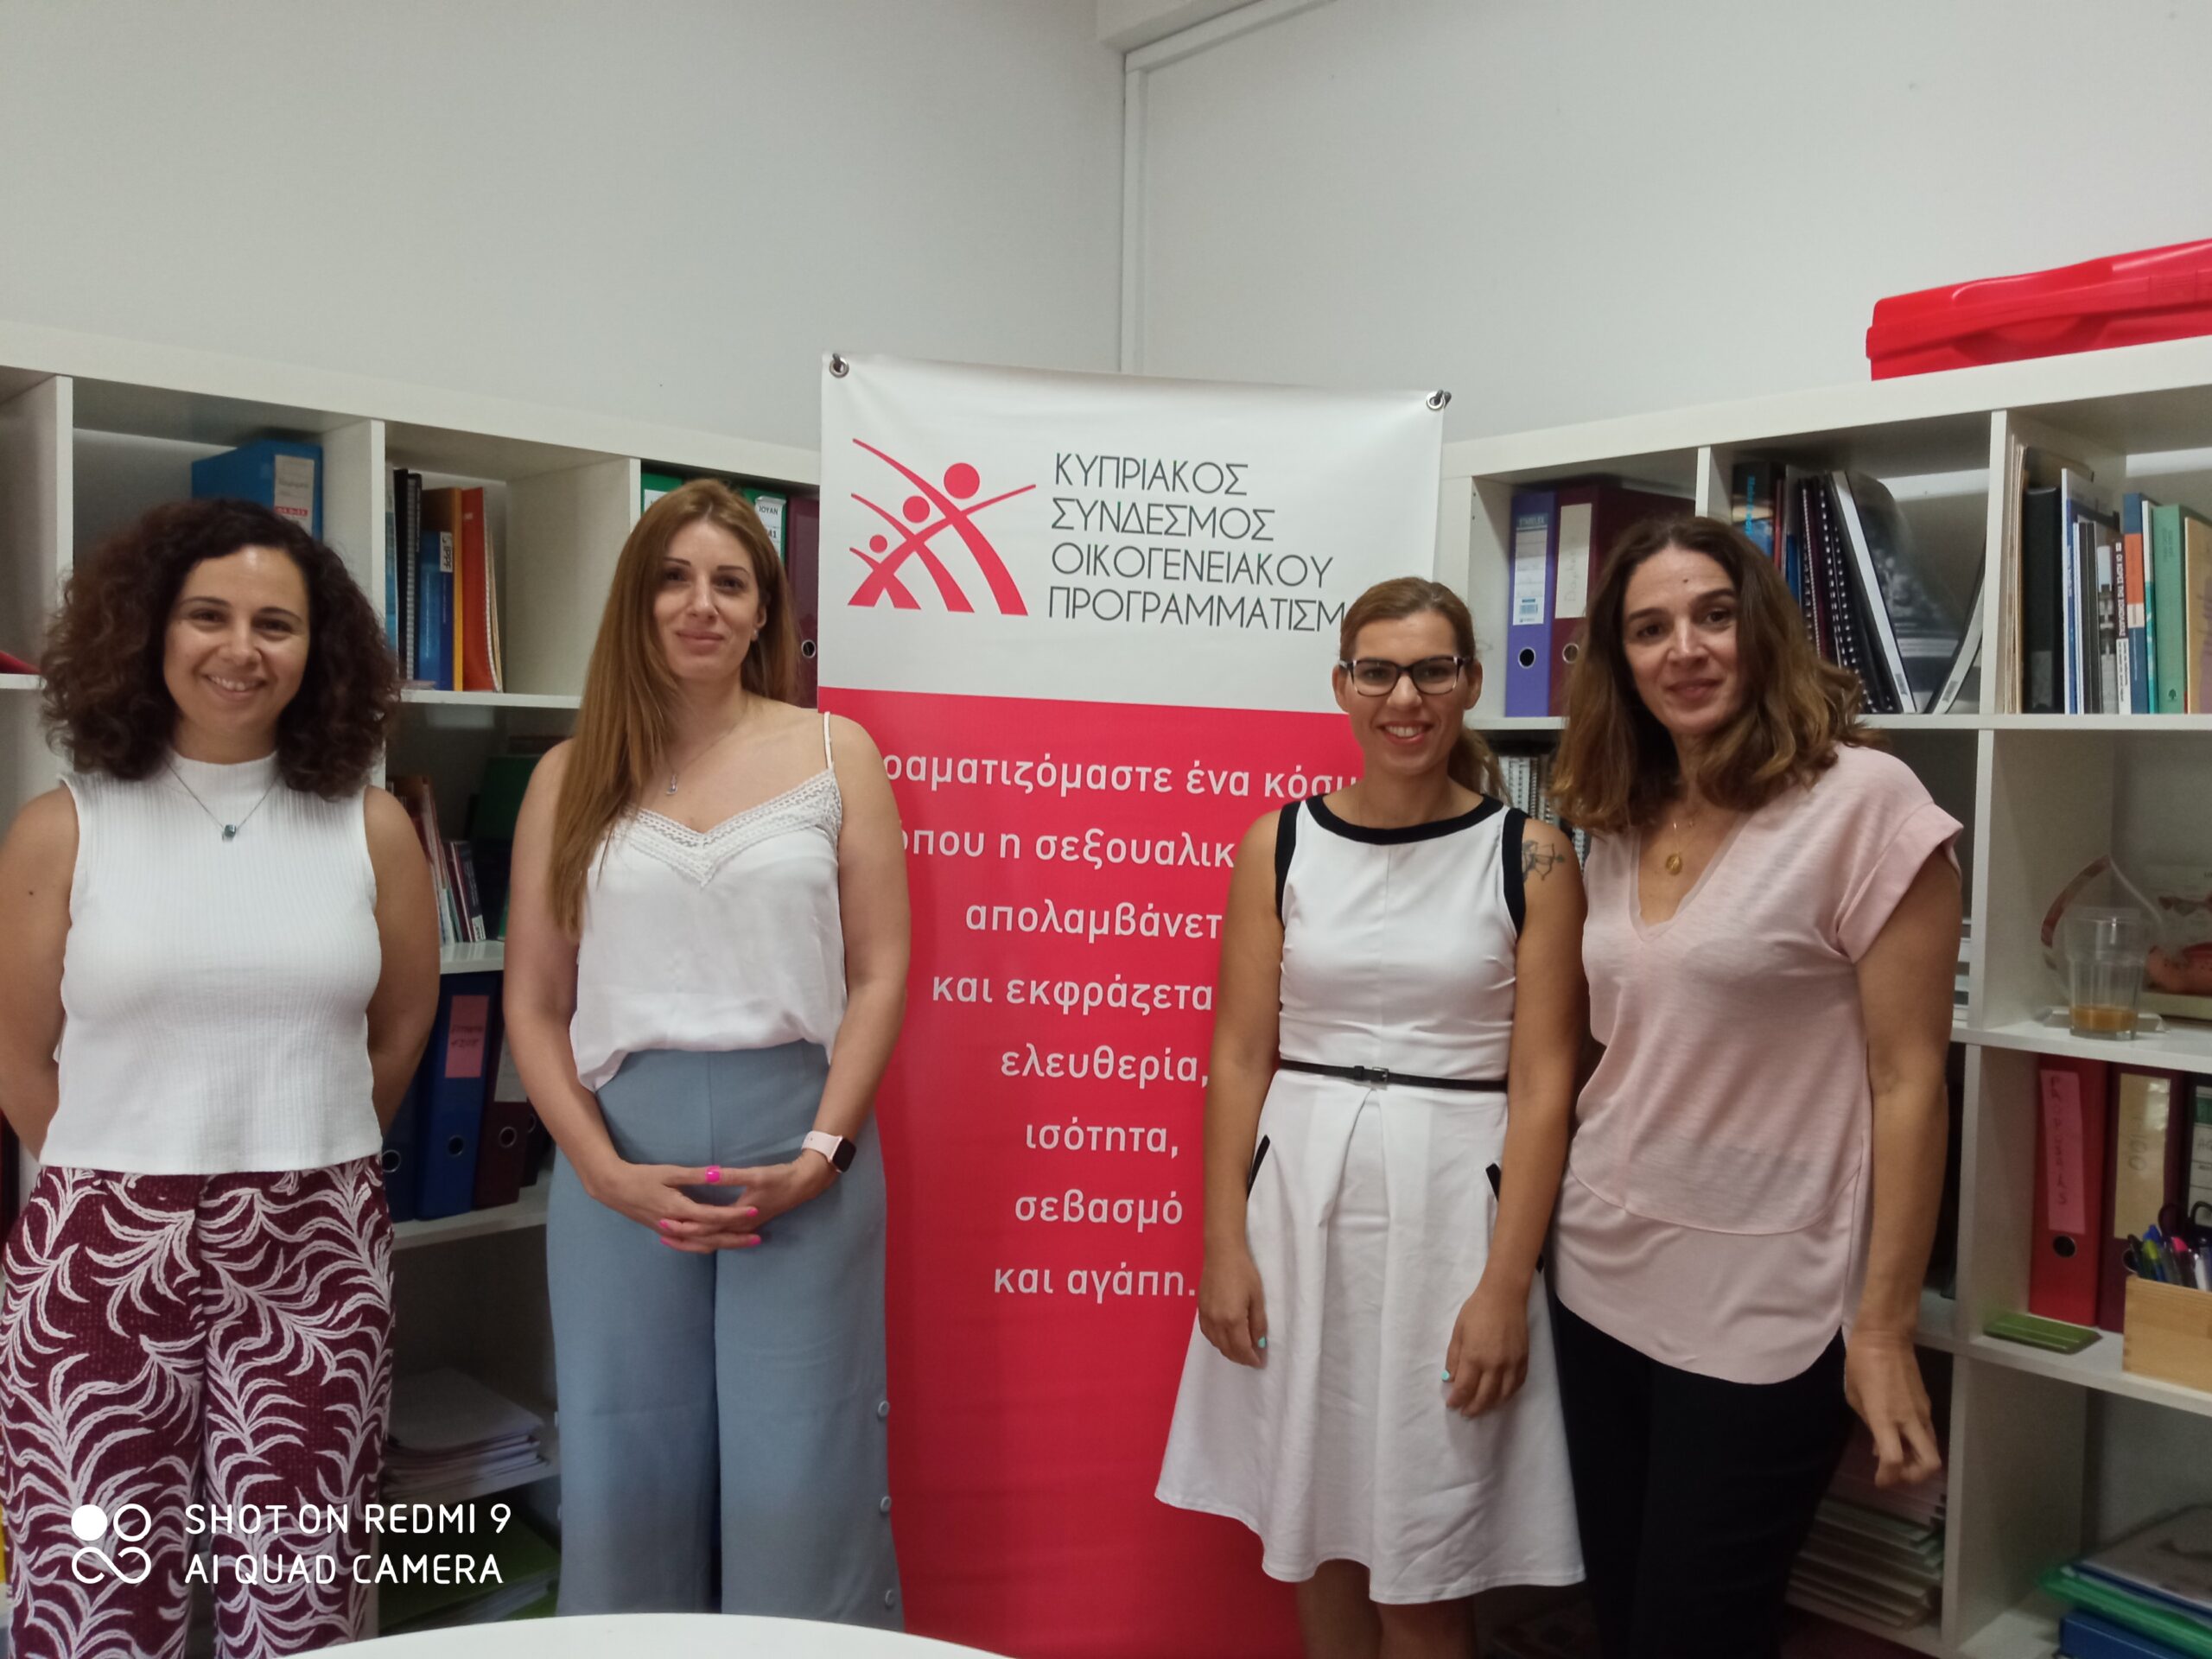 UClan Cyprus - Μνημόνιο Συνεργασίας μεταξύ του Πανεπιστημίου UCLan Cyprus και του Κυπριακού Συνδέσμου Οικογενειακού Προγραμματισμού